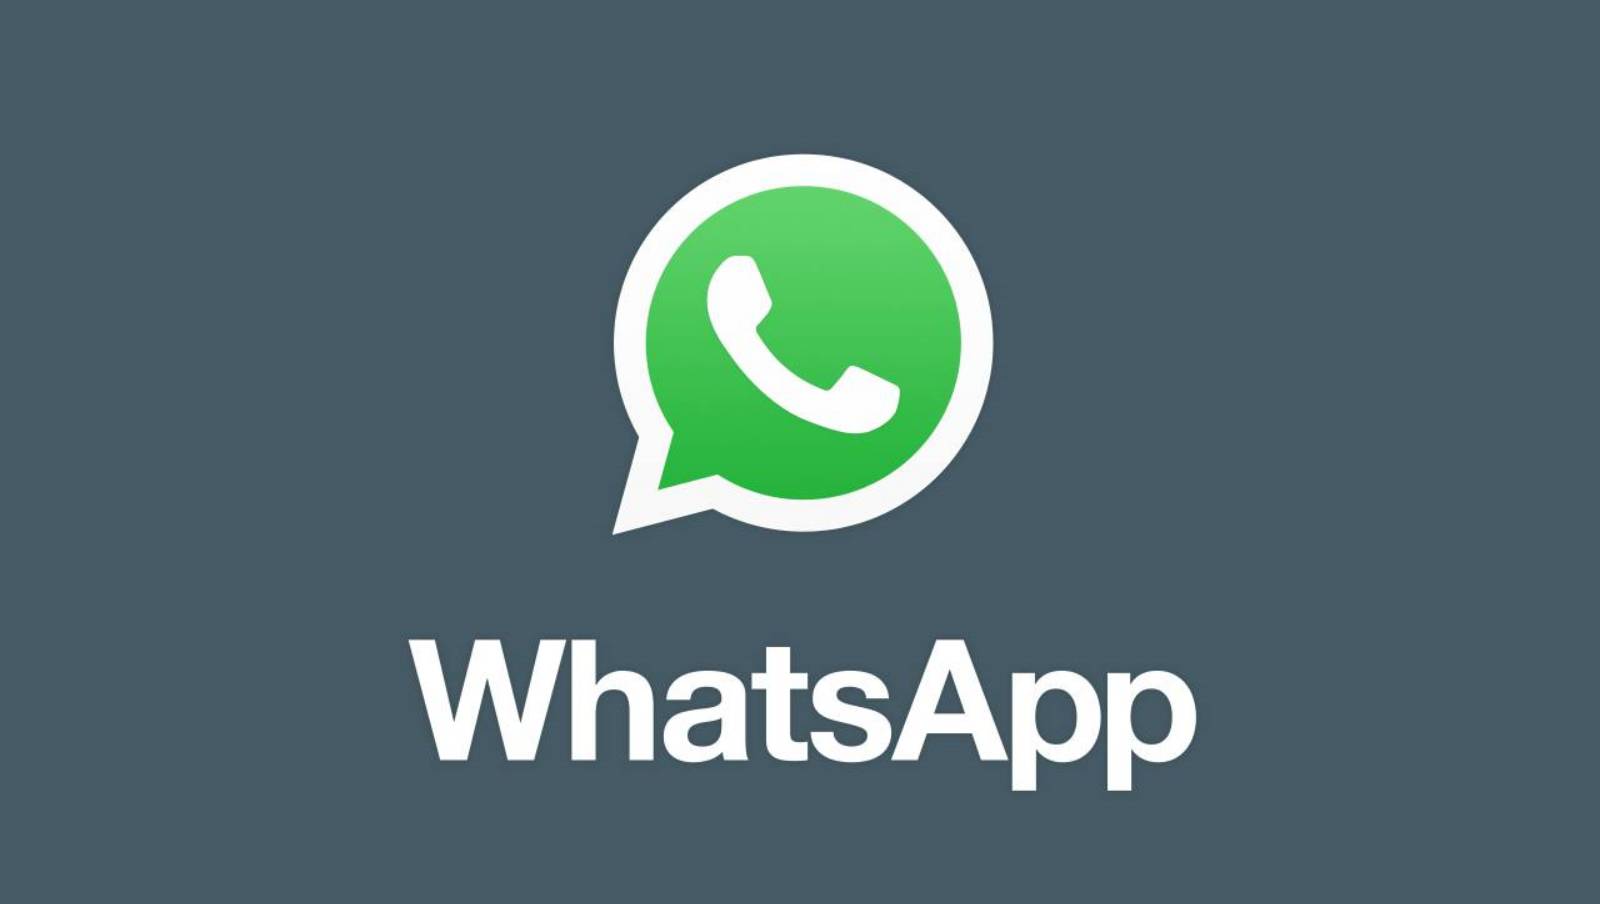 WhatsApp identity